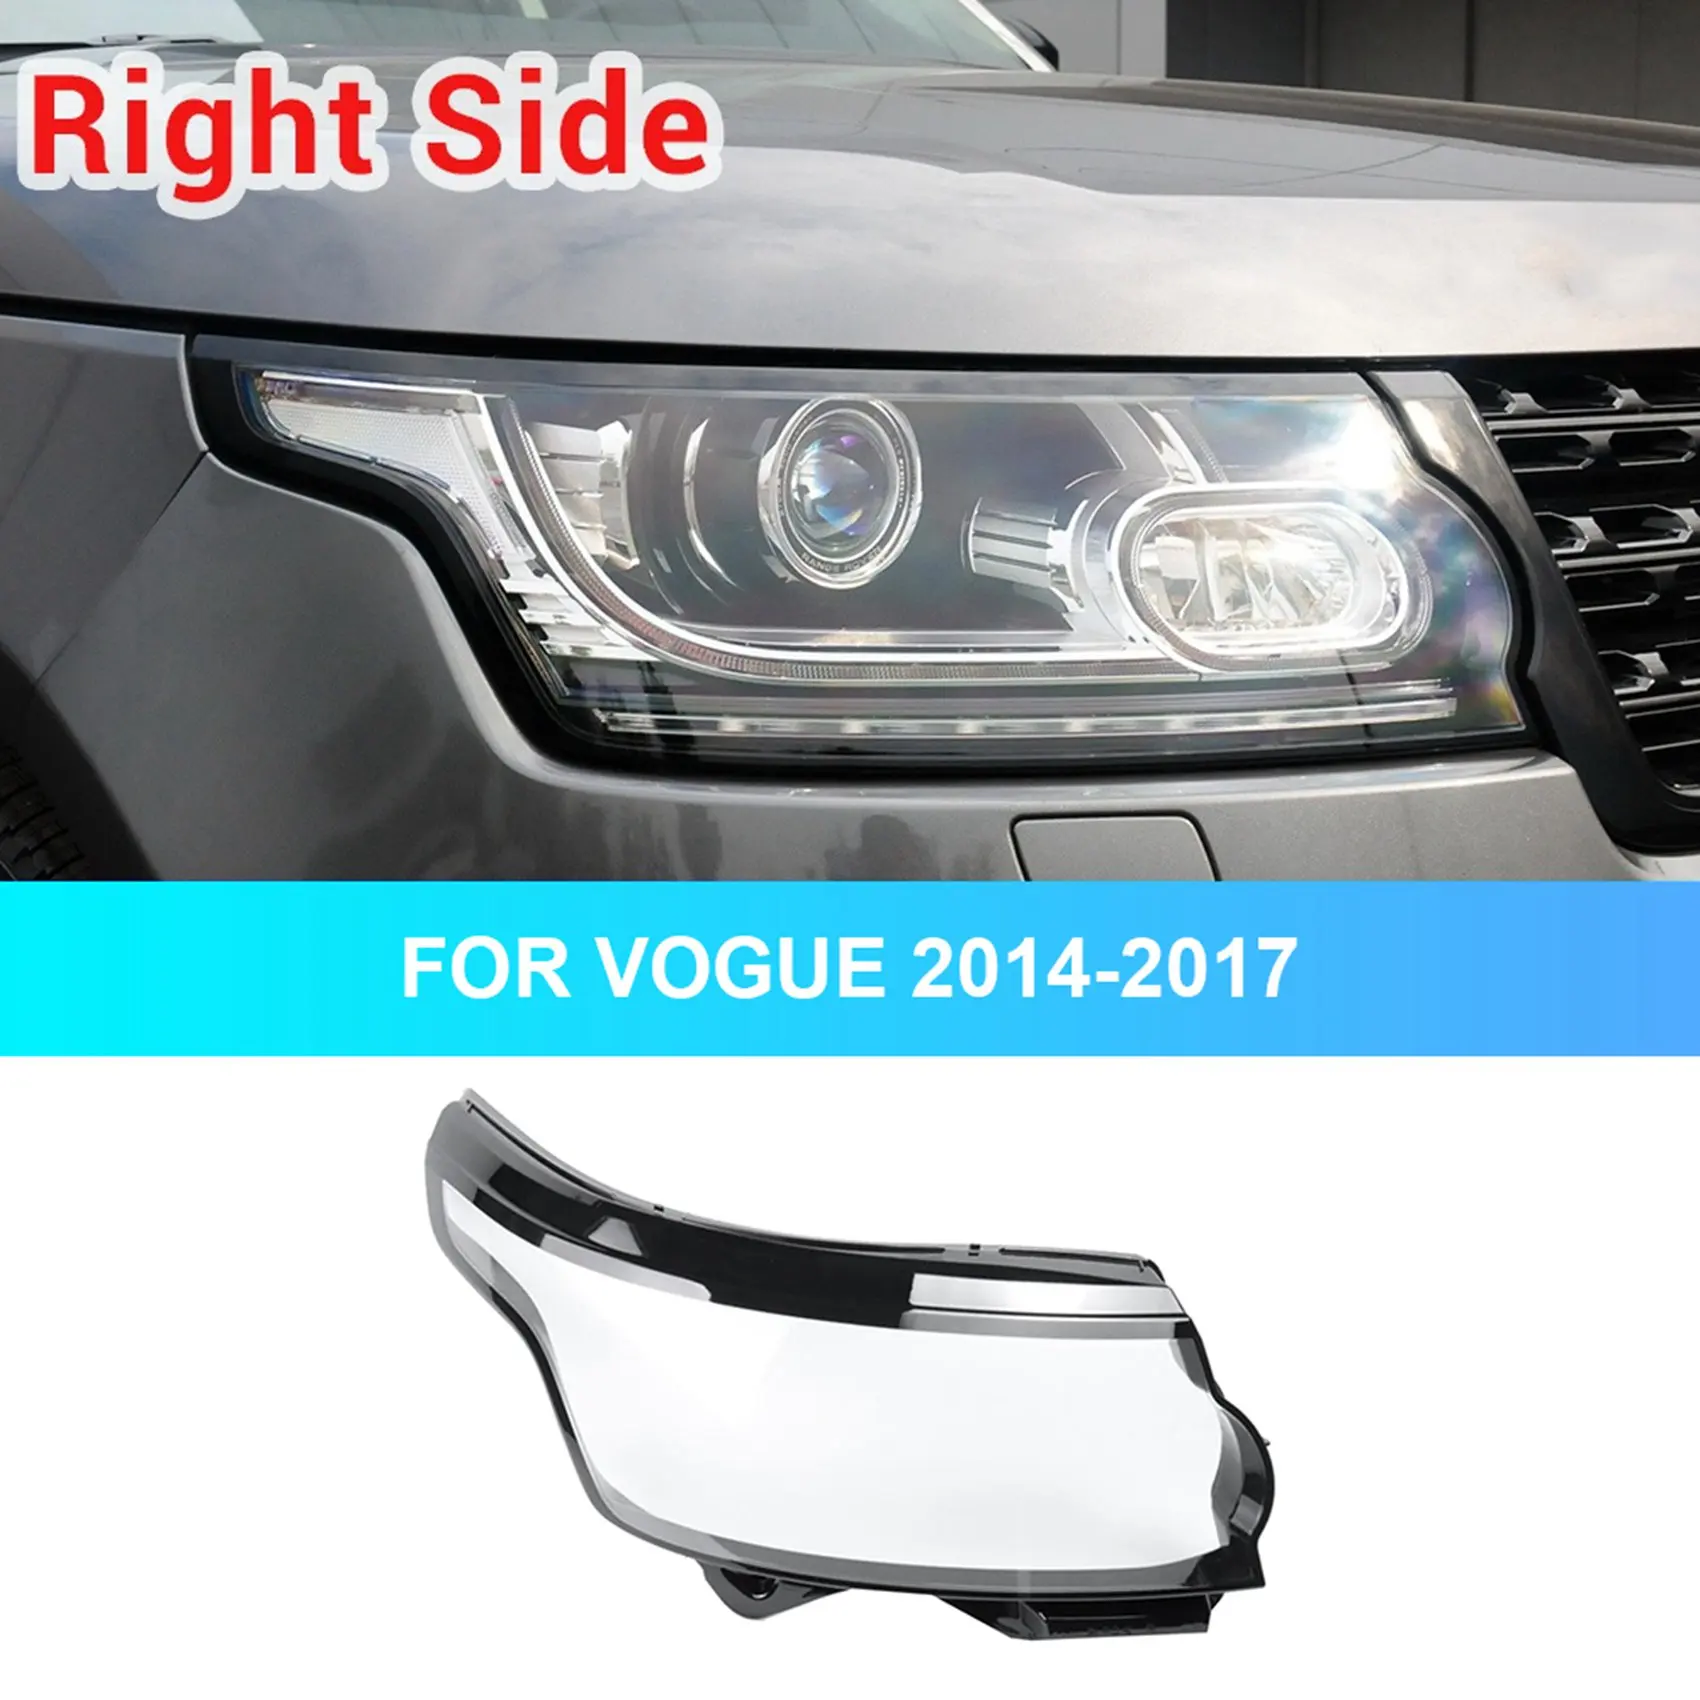 

Передняя правая передняя фара автомобиля, стеклянная головка, лампы, абажур, крышка объектива для Land Rover Range Rover Vogue L405 2014-2017